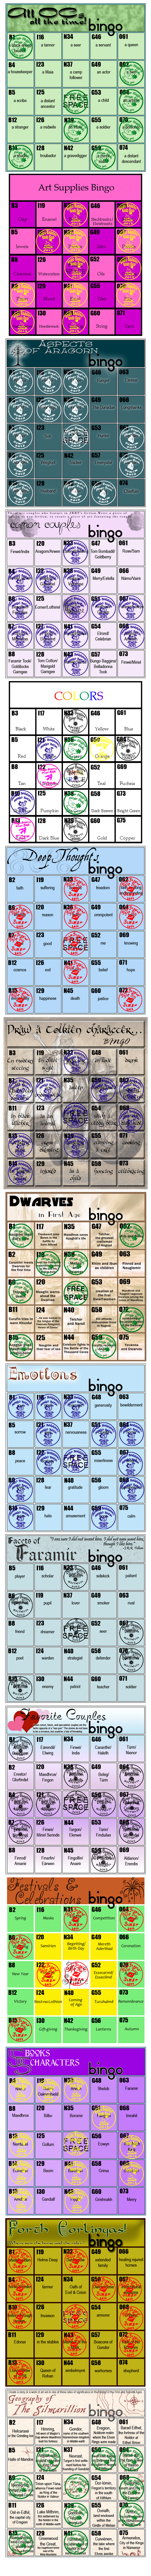 Mirach's Bingo Cards